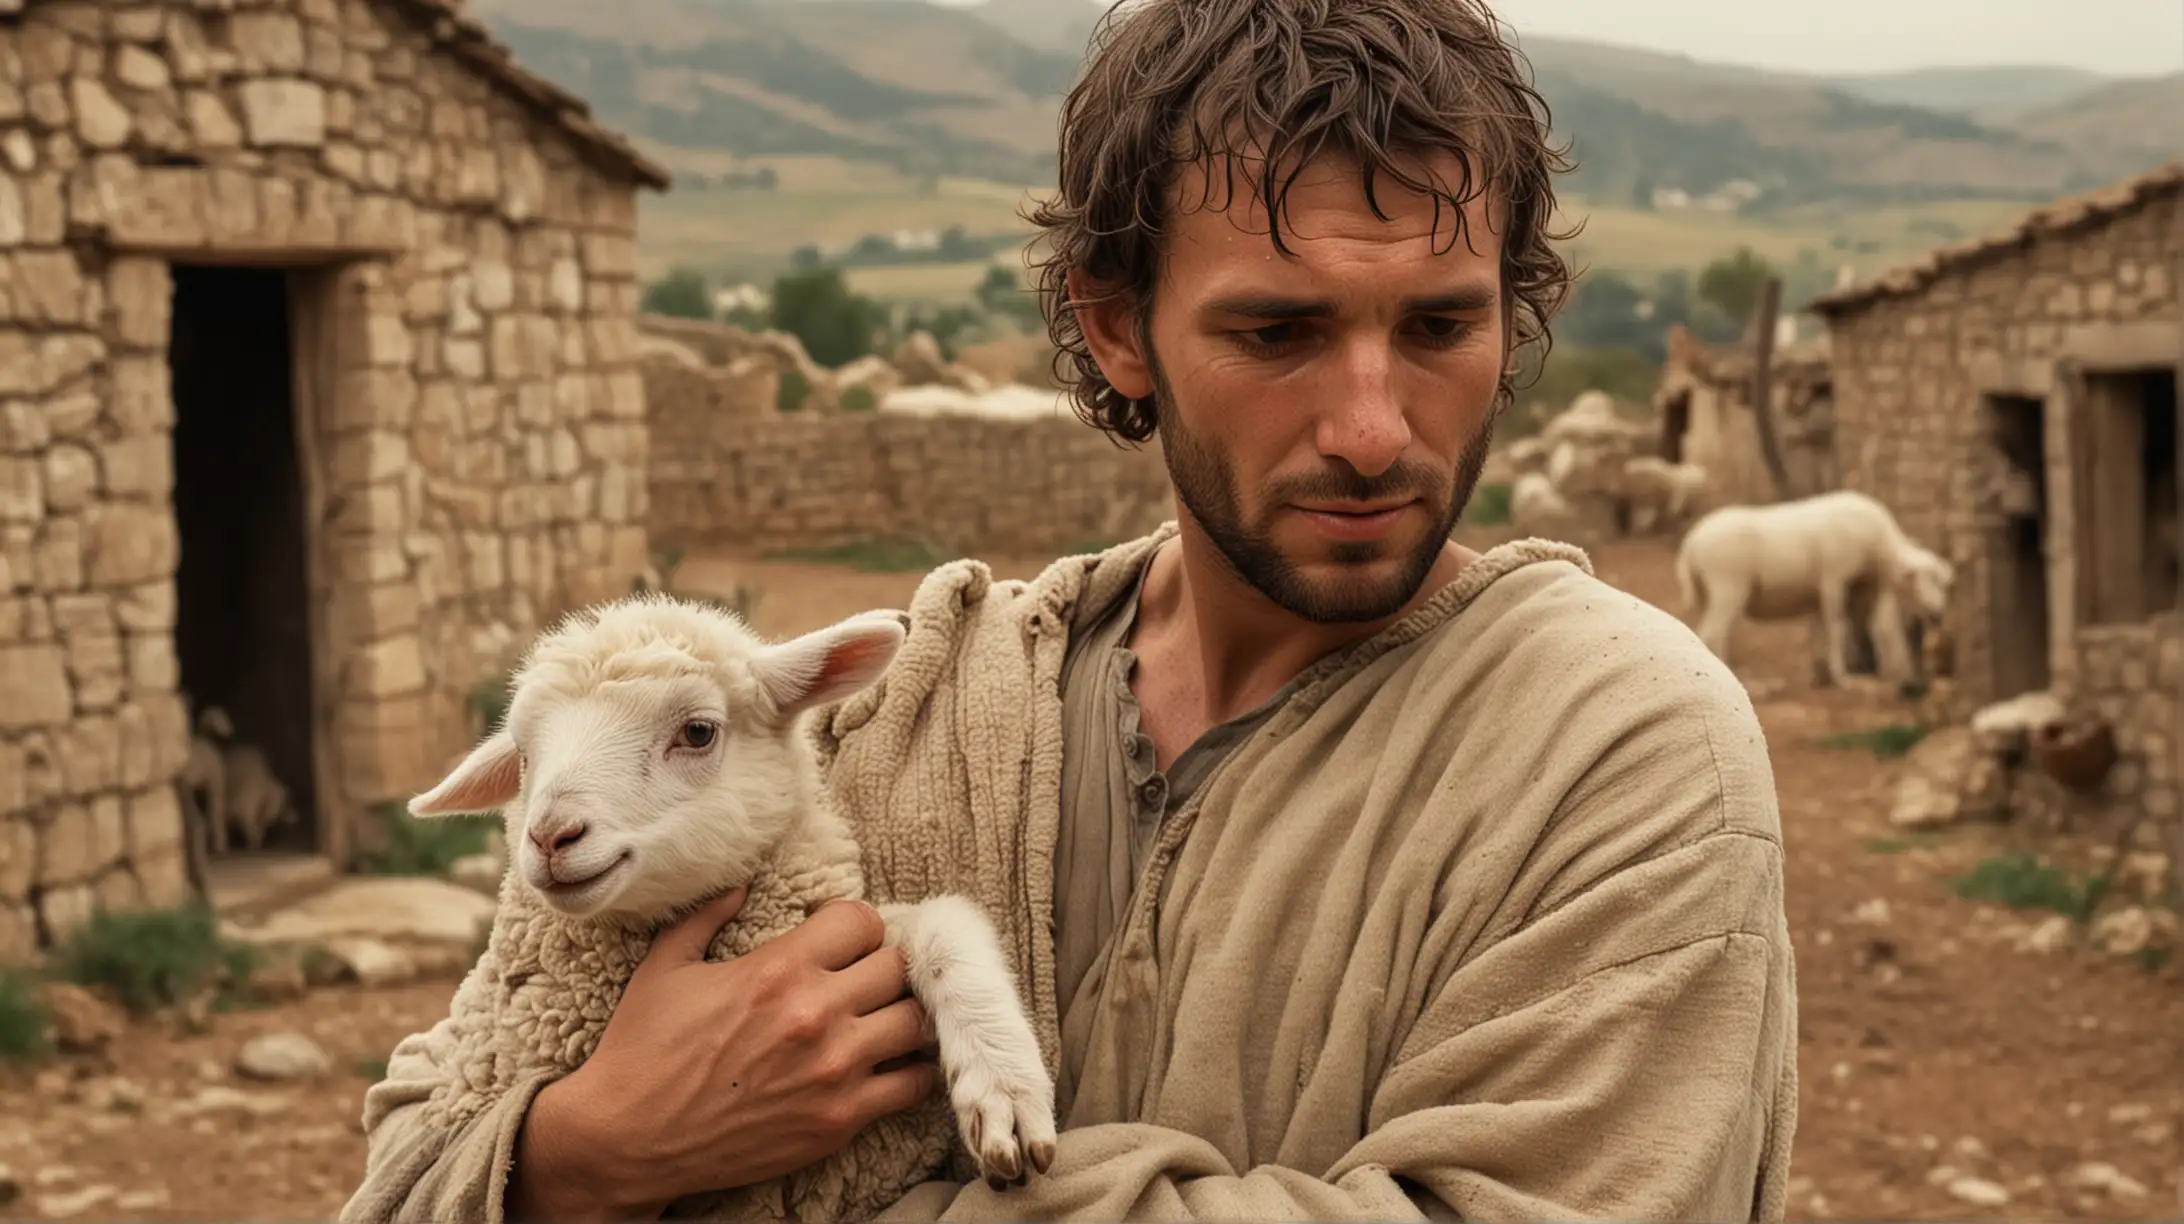 Biblical Era Poor Man with Lamb Outside Modest Dwelling